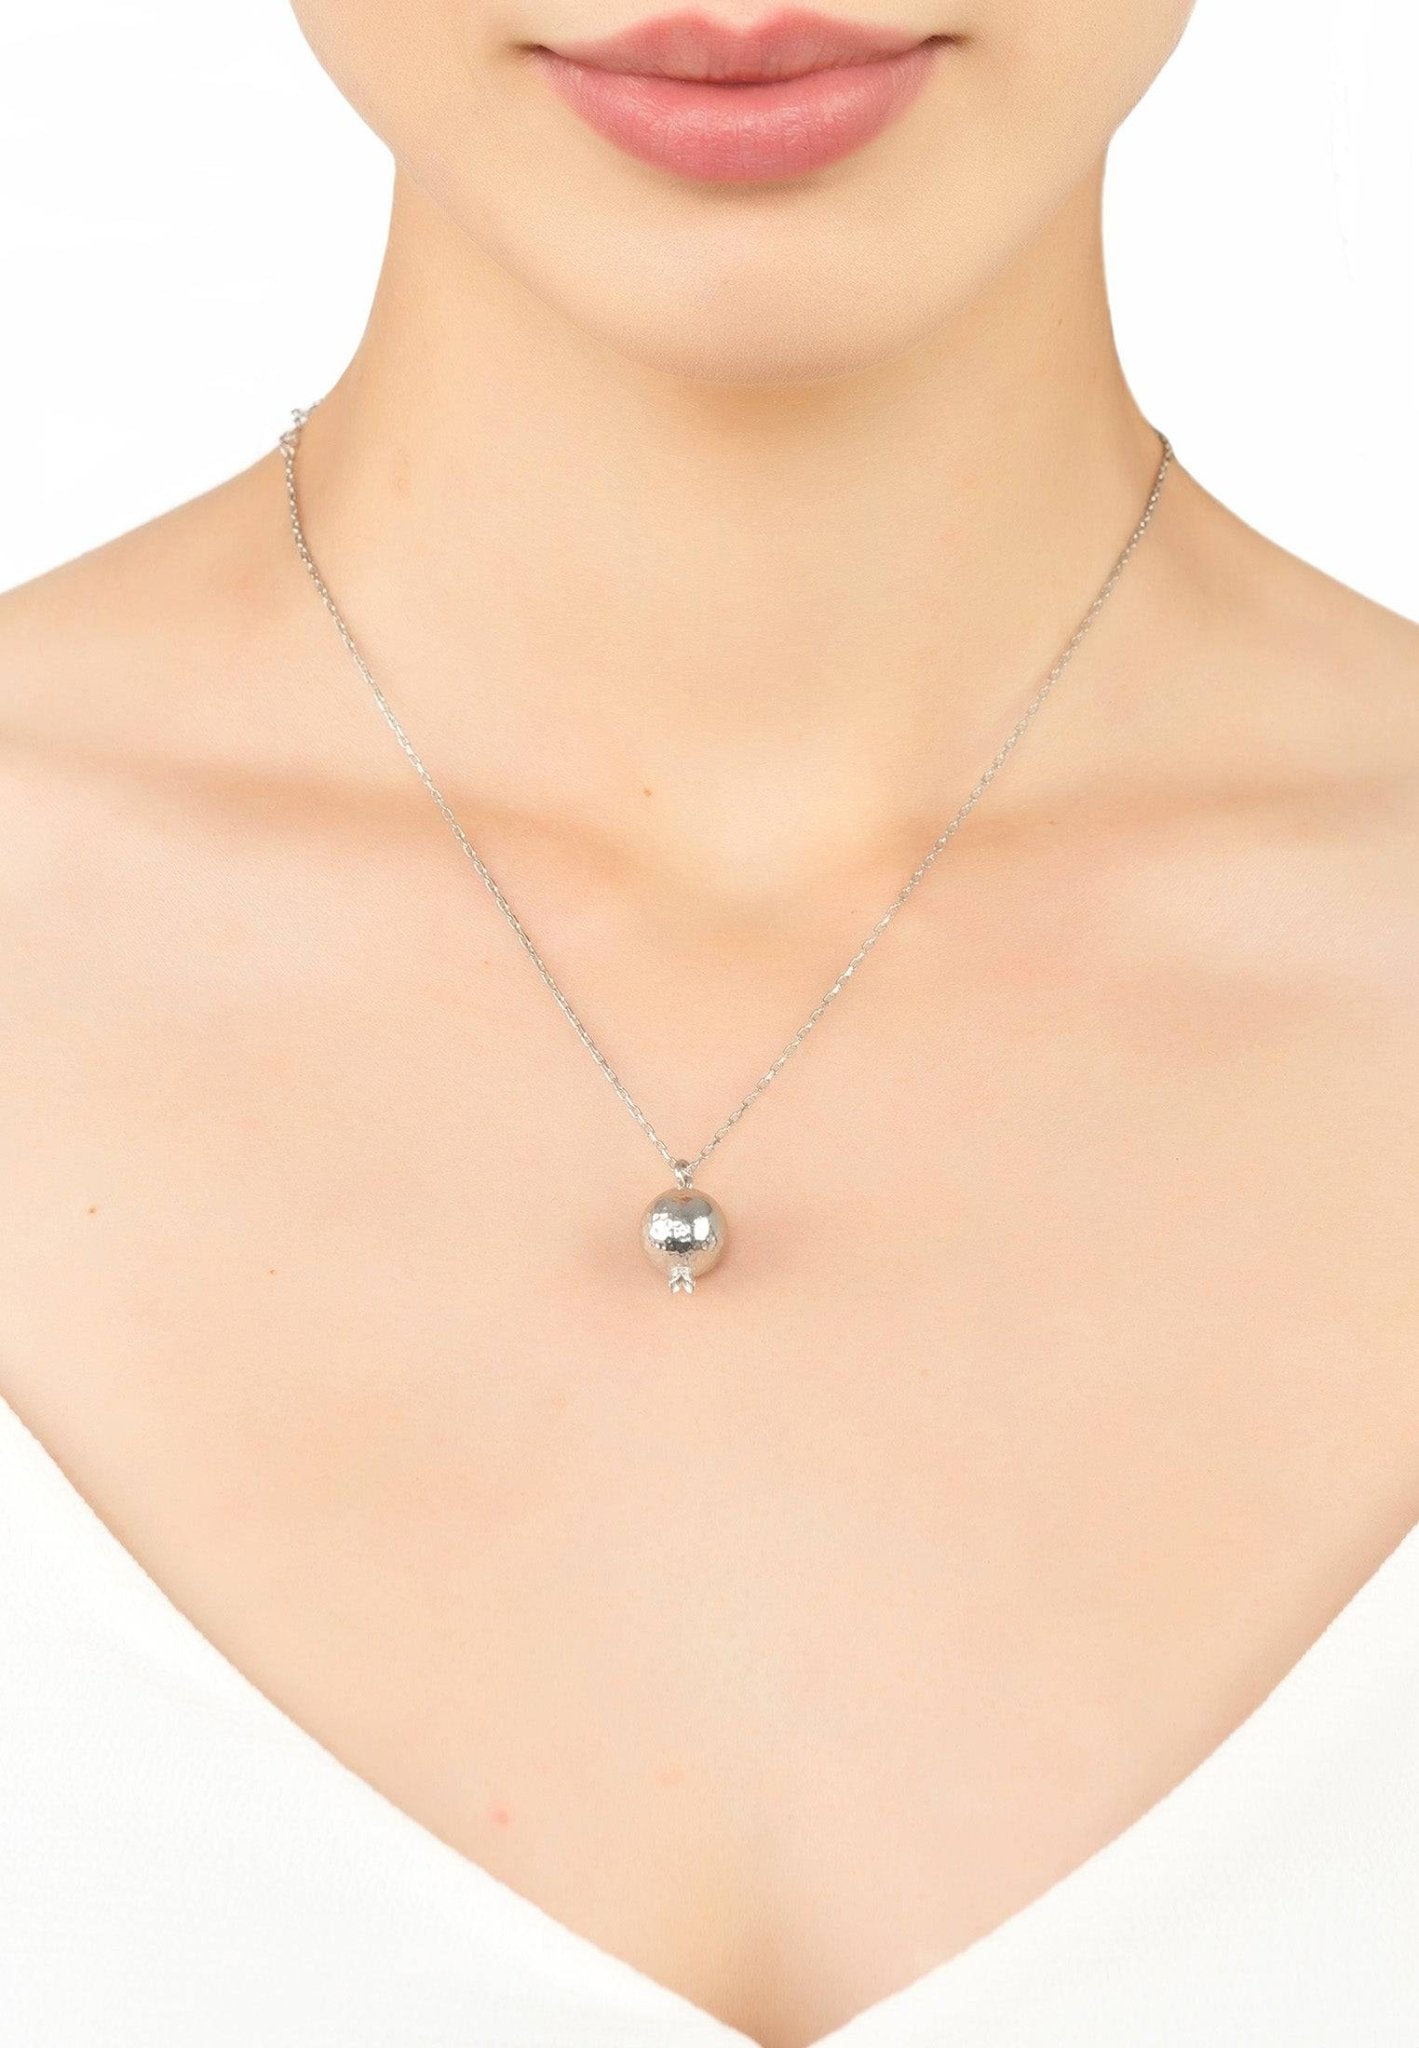 Pomegranate Charm Necklace Silver - LATELITA Necklaces